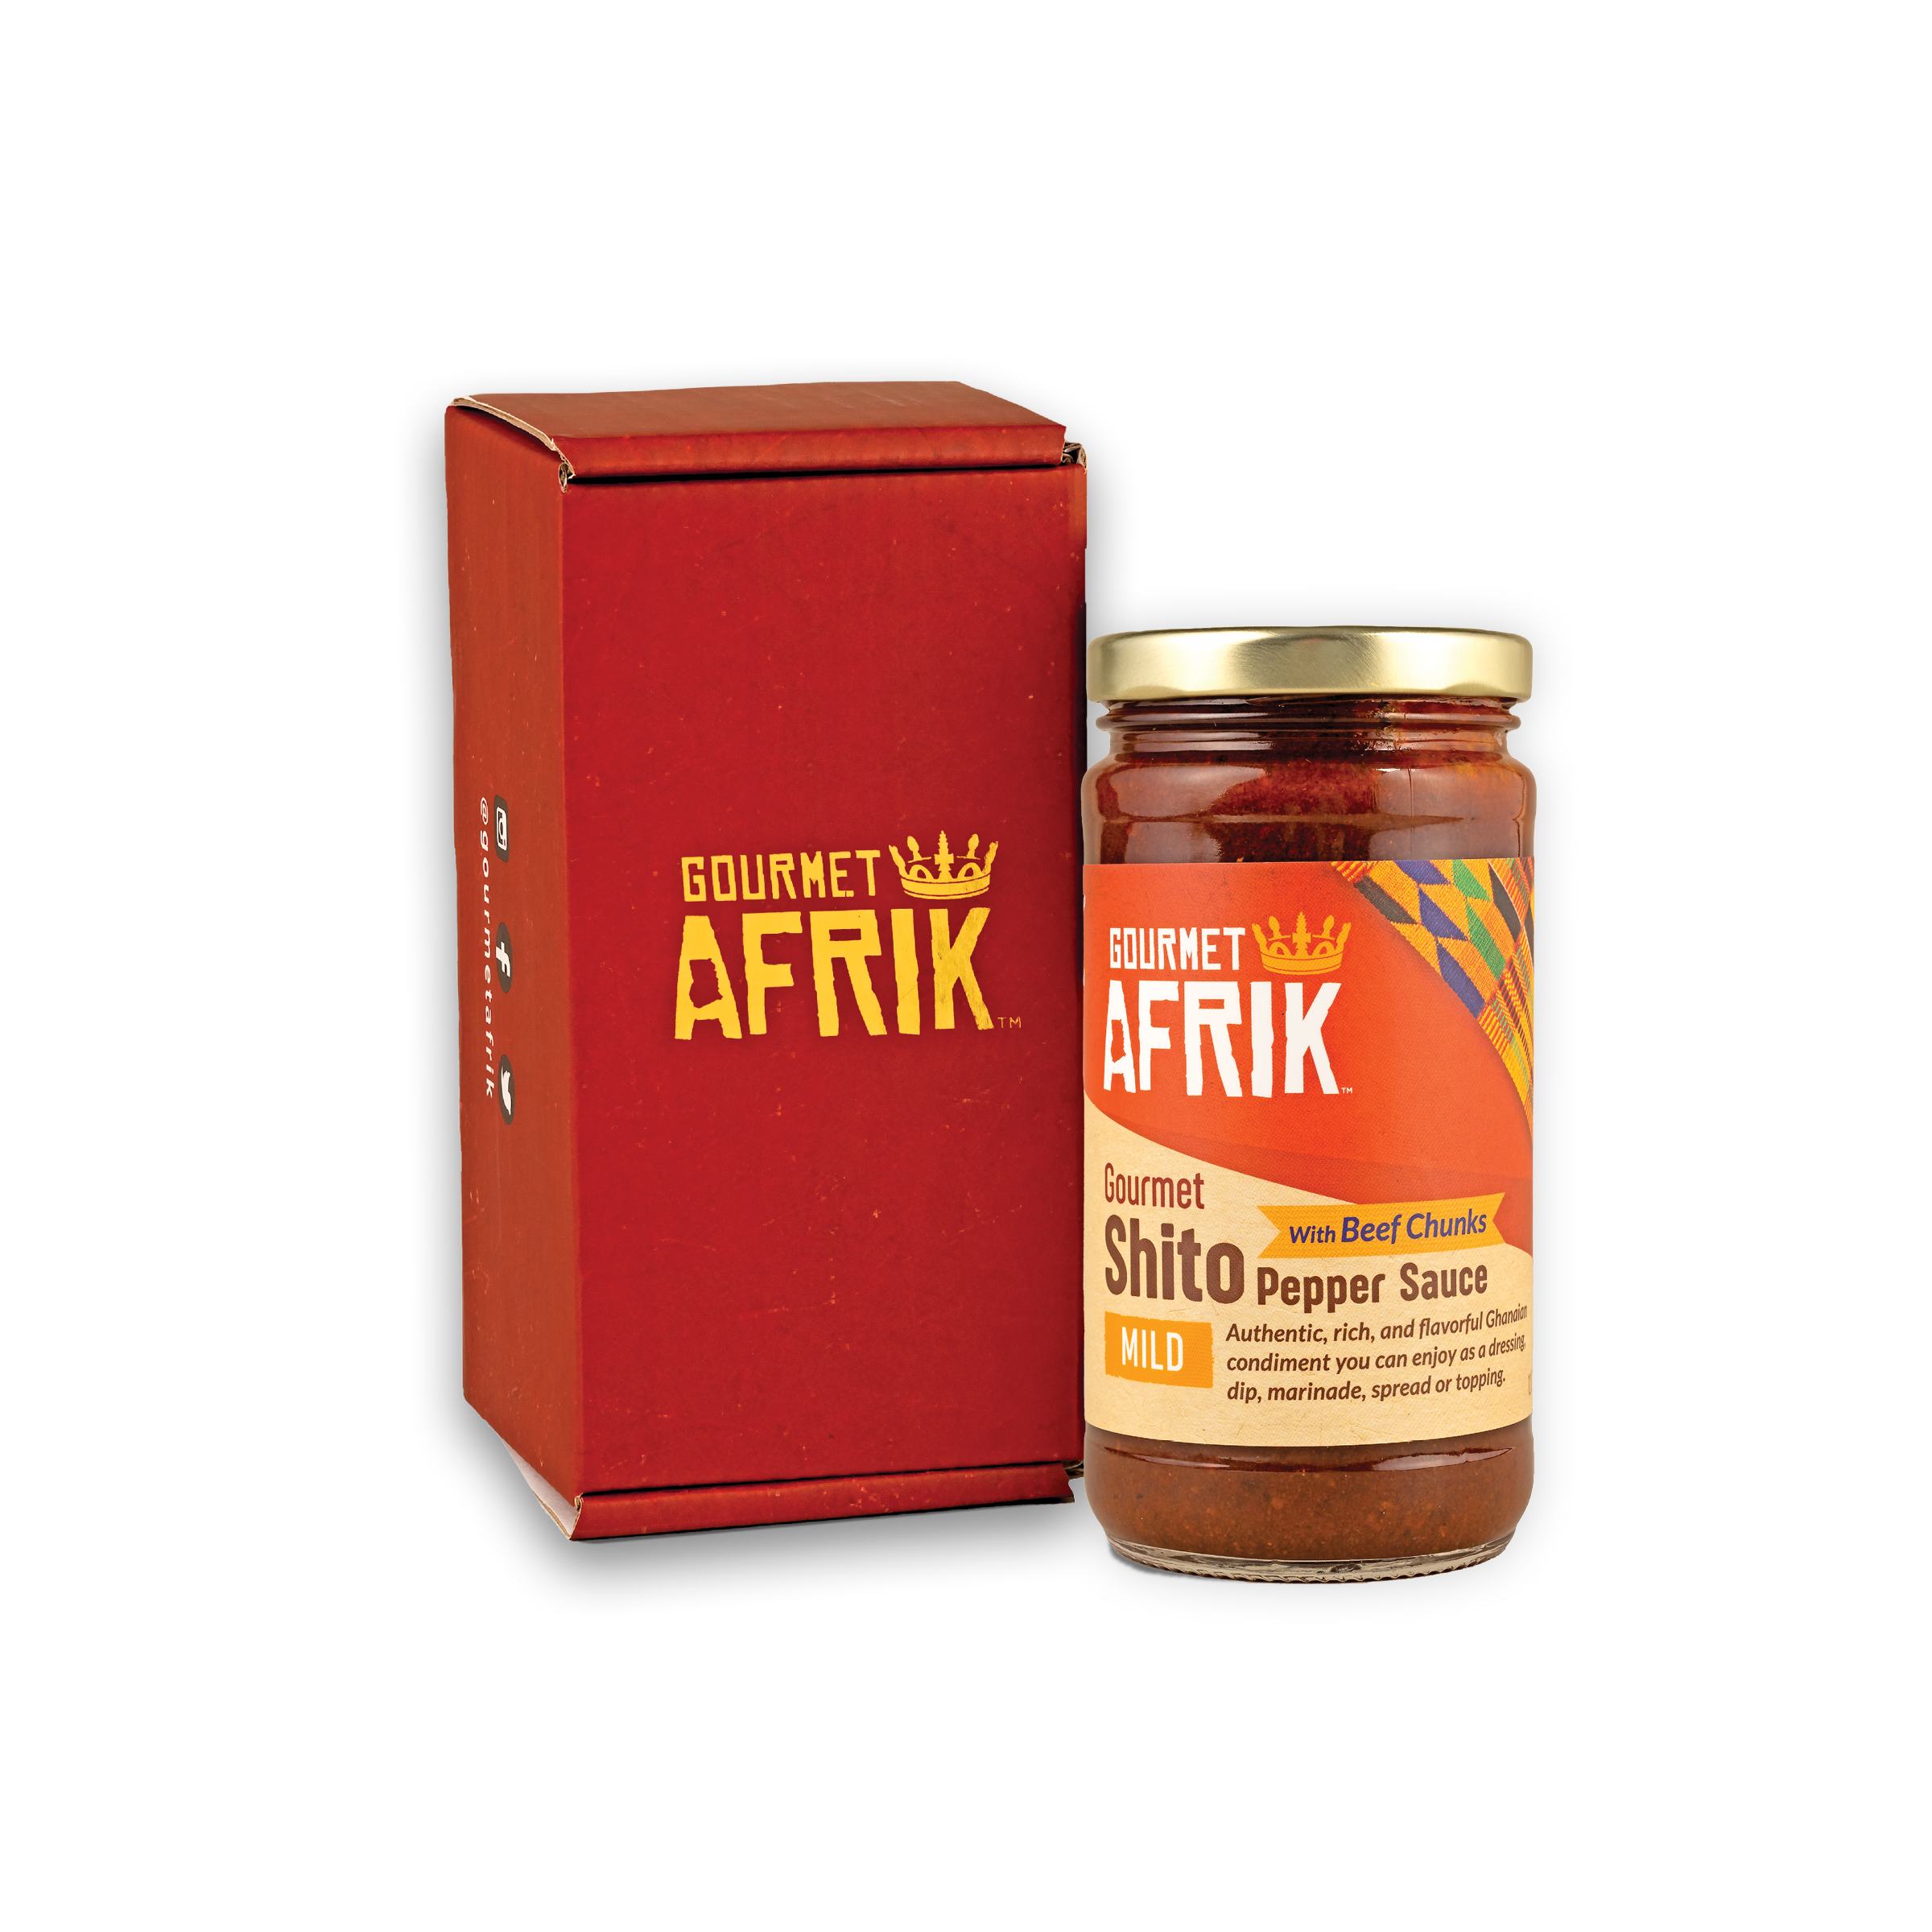 x2 Africa's Finest Shito Hot & Mild 160g - Afrimartuk